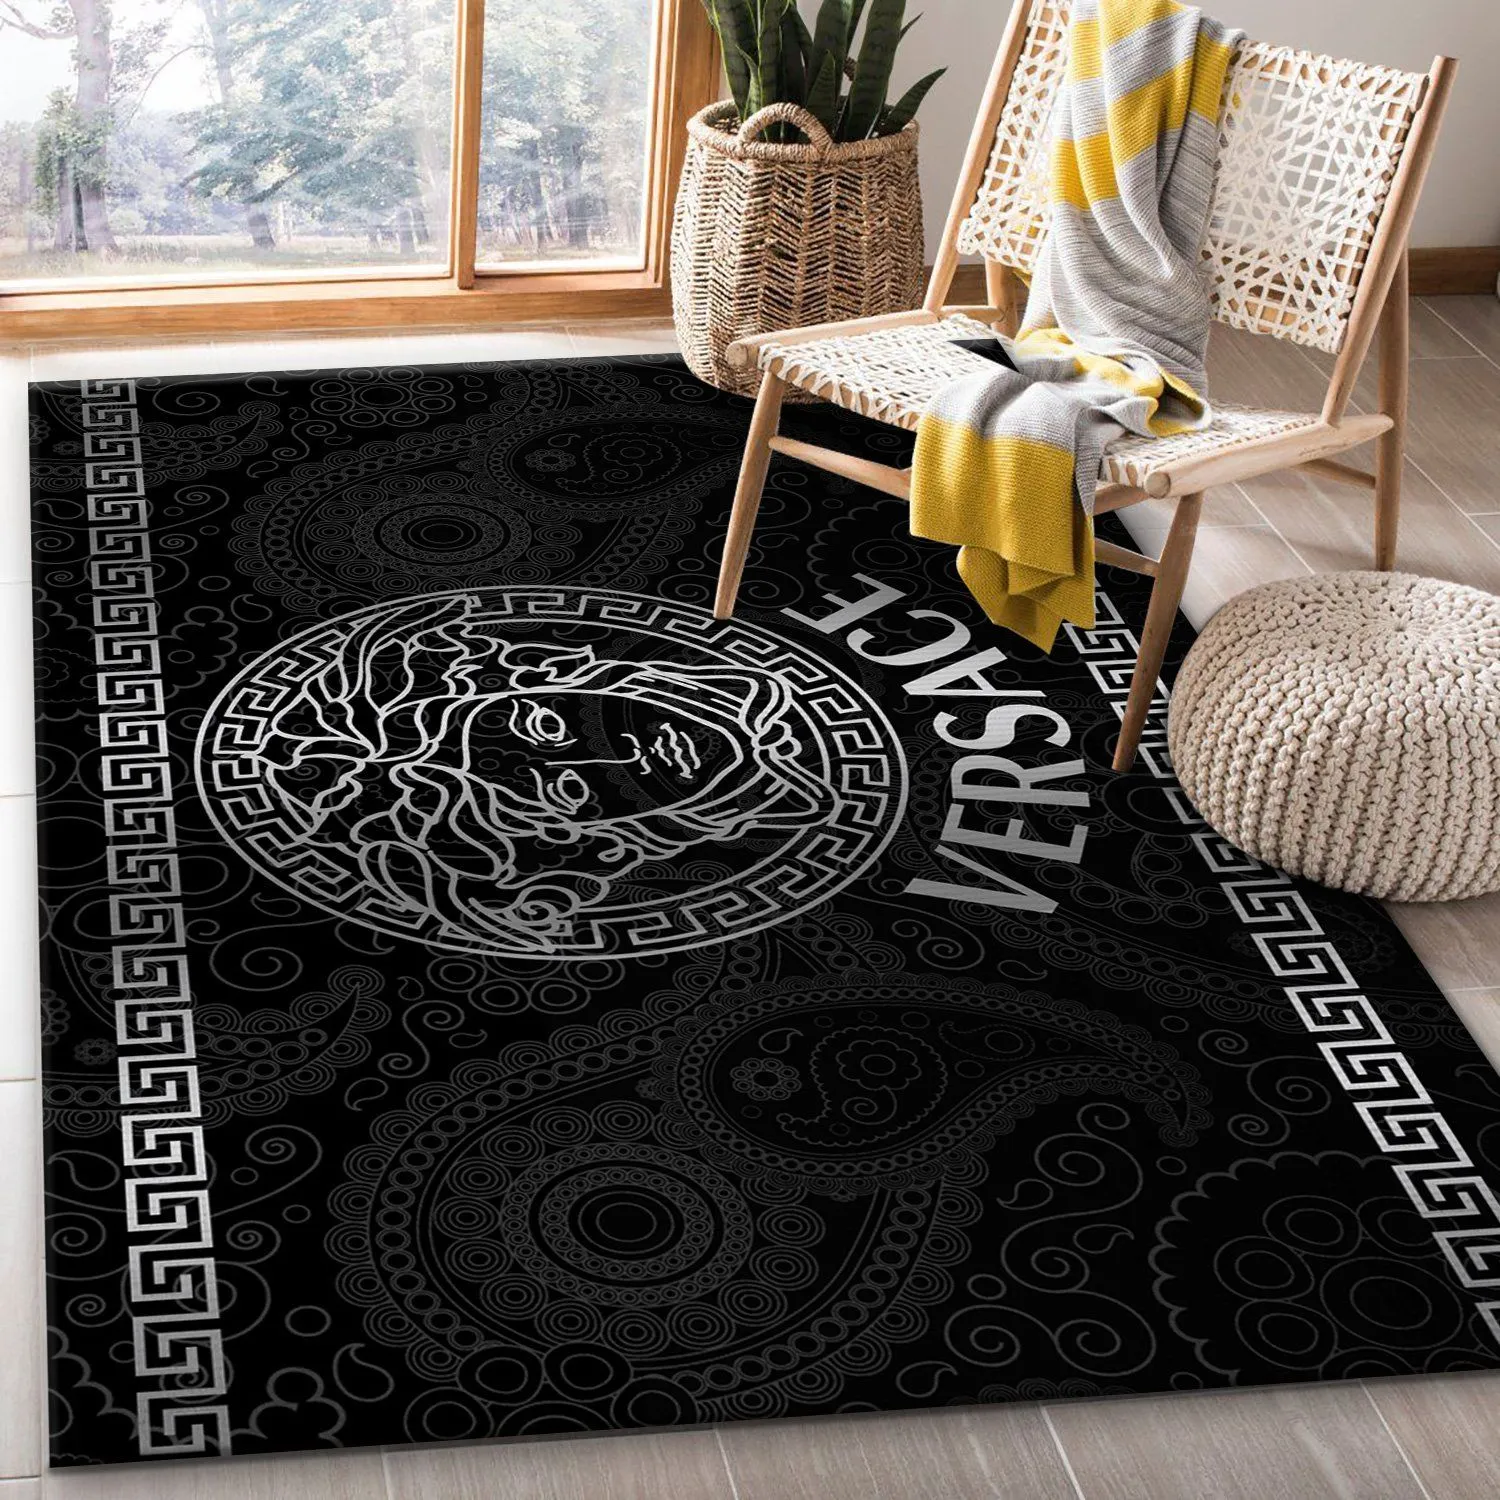 Versacesil Rectangle Rug Area Carpet Home Decor Fashion Brand Door Mat Luxury